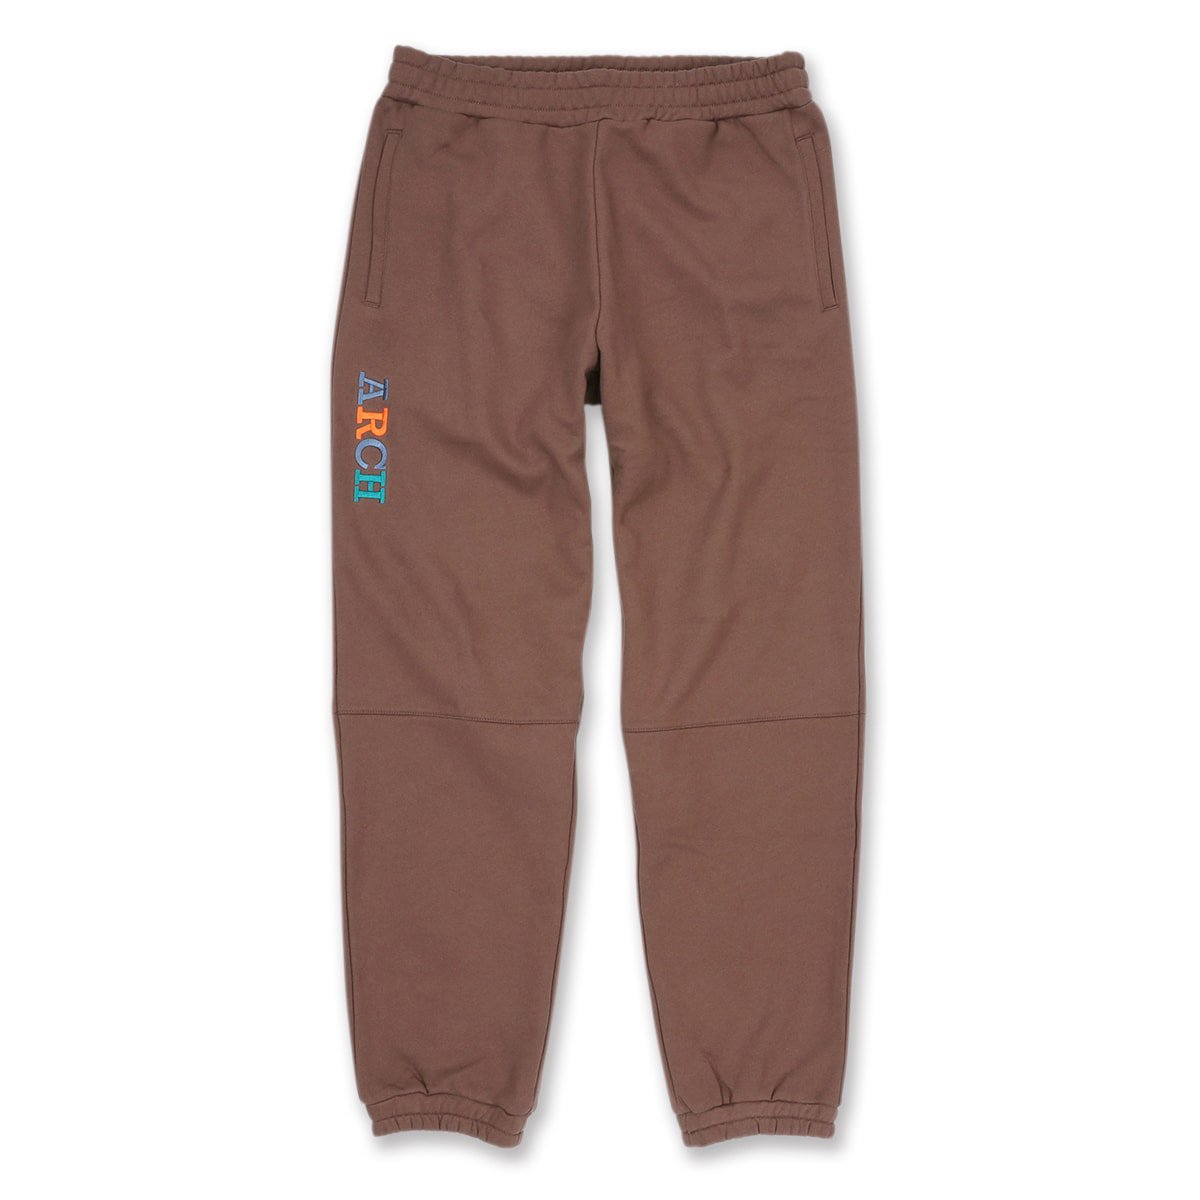 4colors sweat pants【cocoa】 - Arch ☆ アーチ [バスケットボール＆ライフスタイルウェア  Basketball&Lifestyle wear]